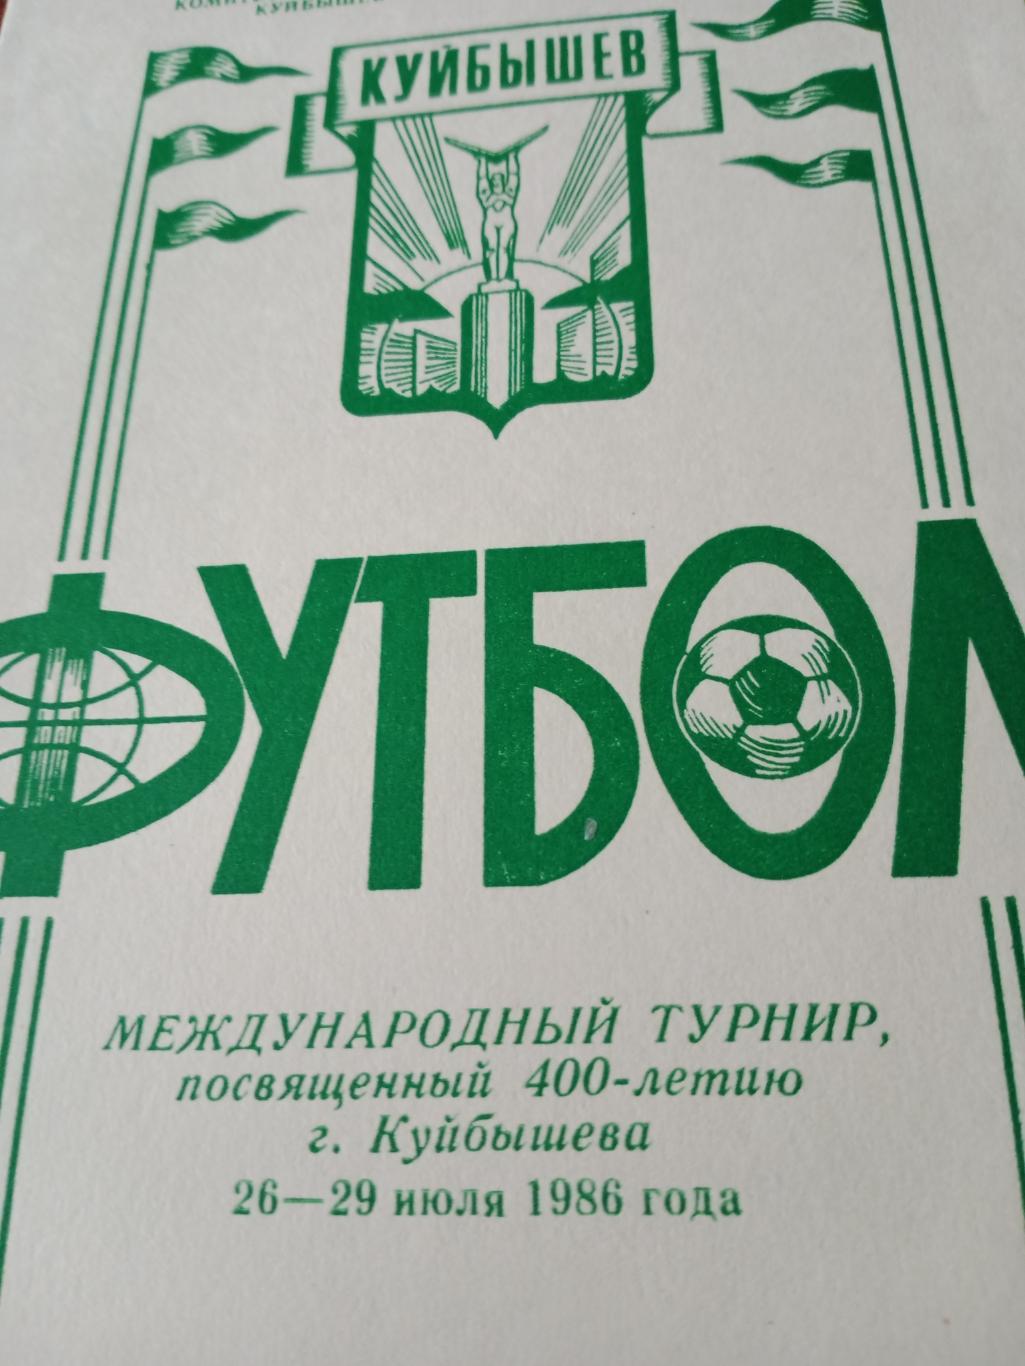 Международный турнир 400 летию Куйбышева. 1986 год